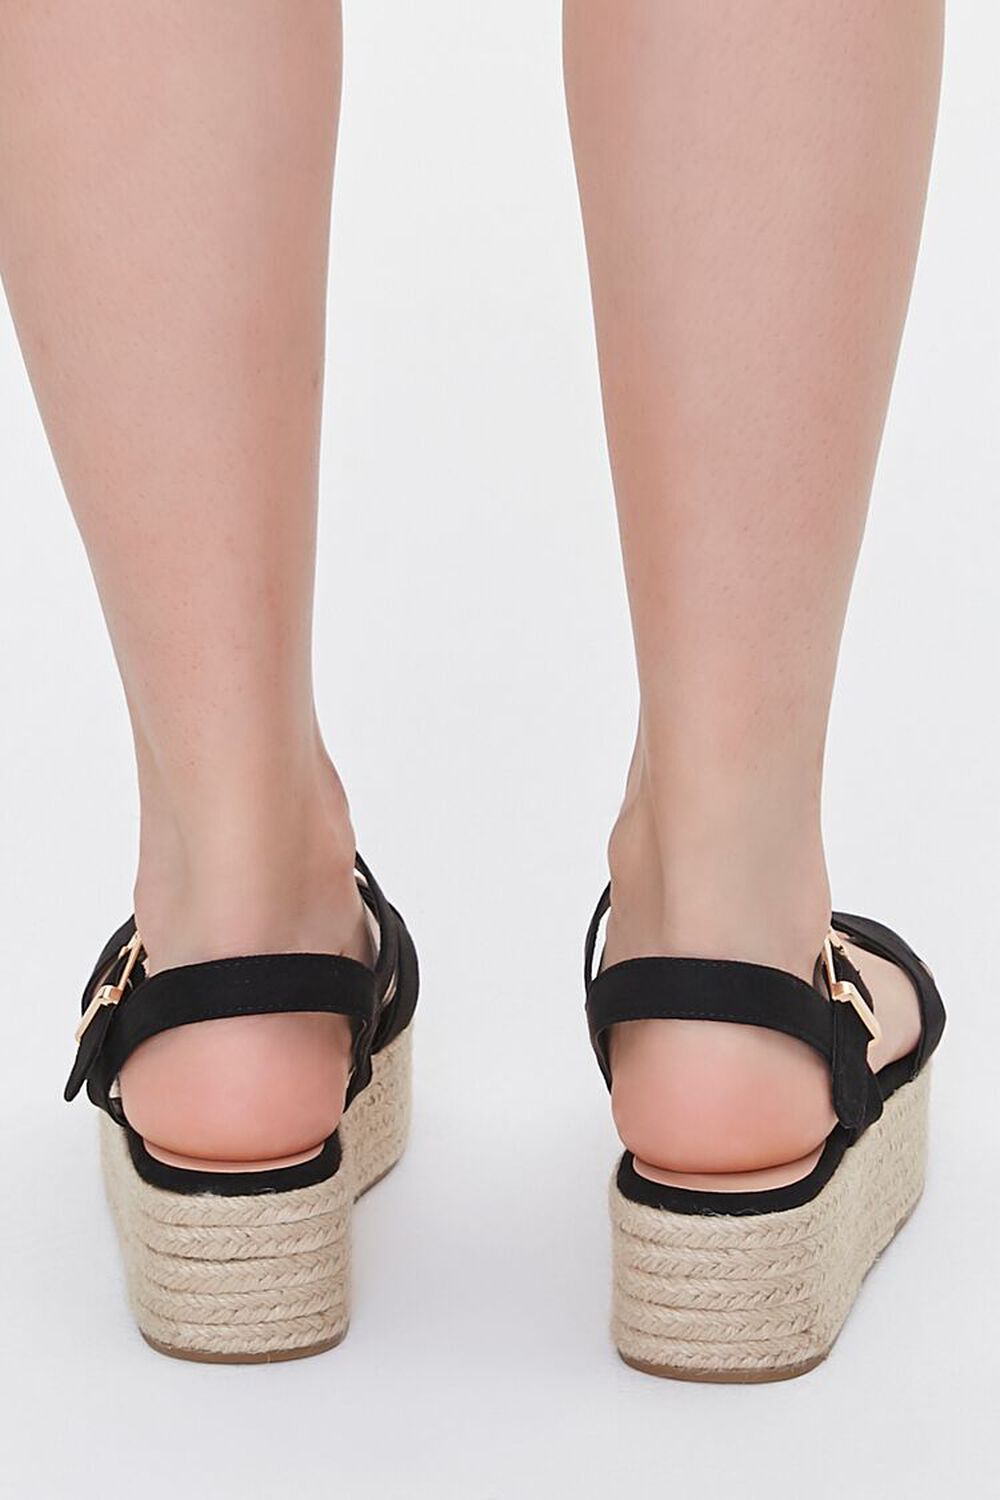 BLACK Faux Suede Espadrille Flatform Sandals, image 3